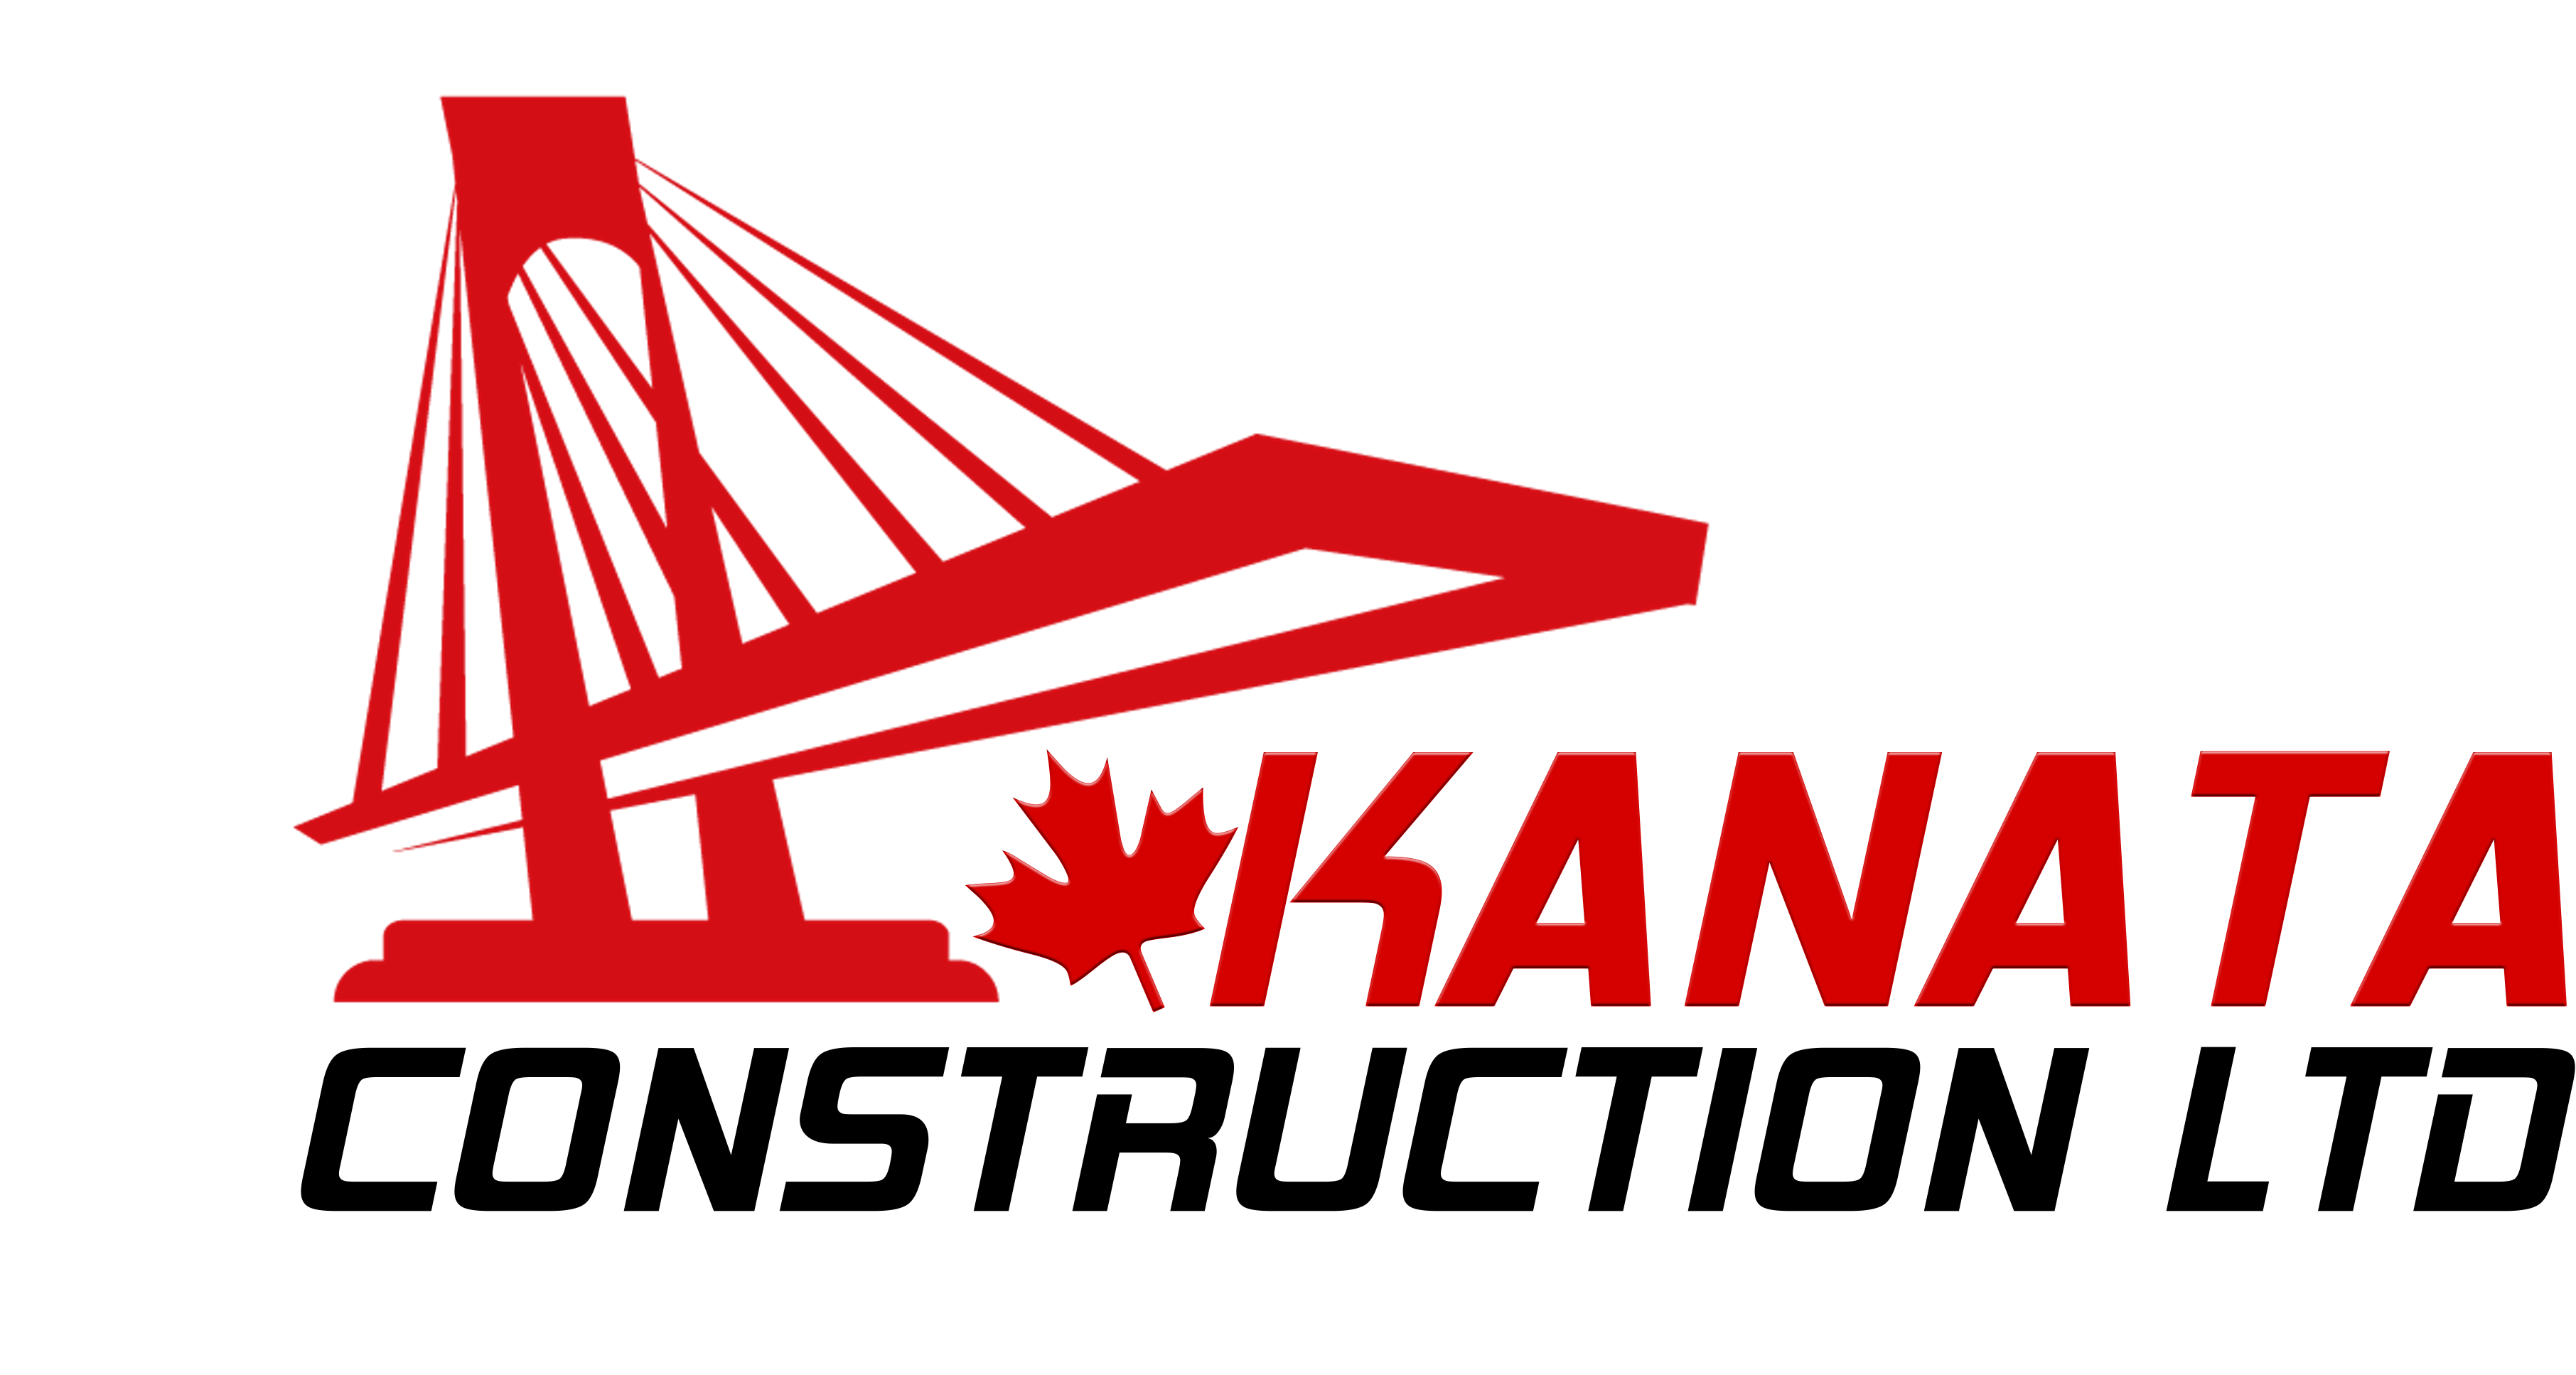 kanataconstruction